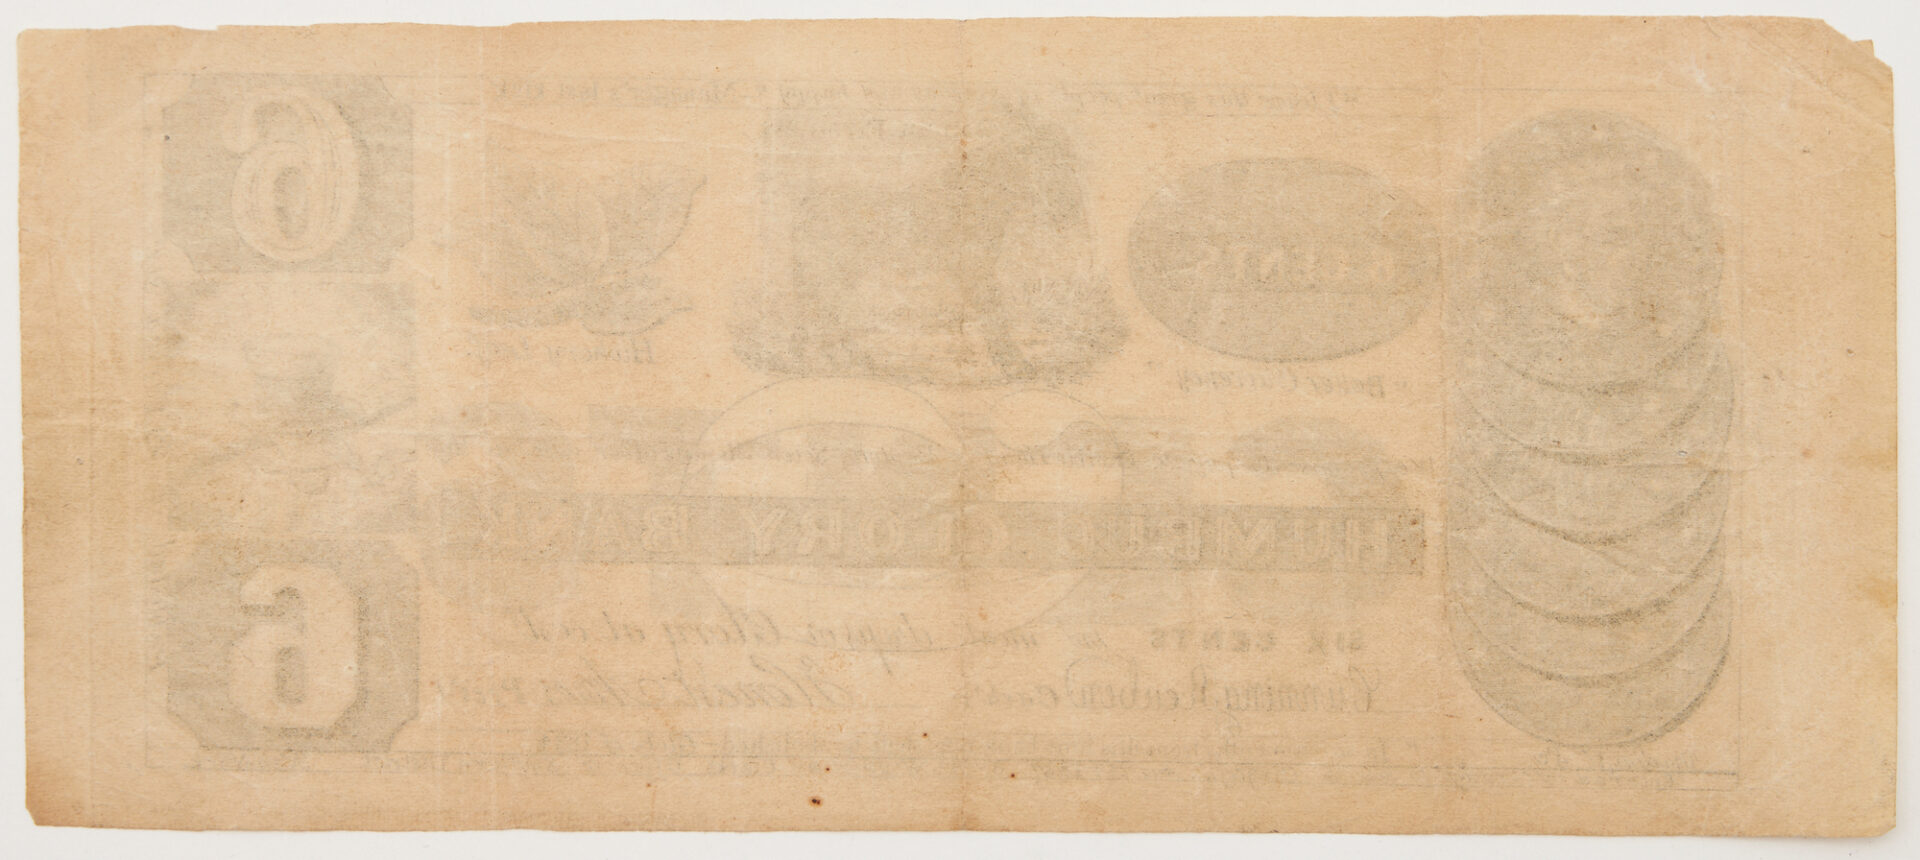 Lot 640: Jacksonian Satirical Humbug Glory Bank Note, Panic of 1837 Related, 2 items